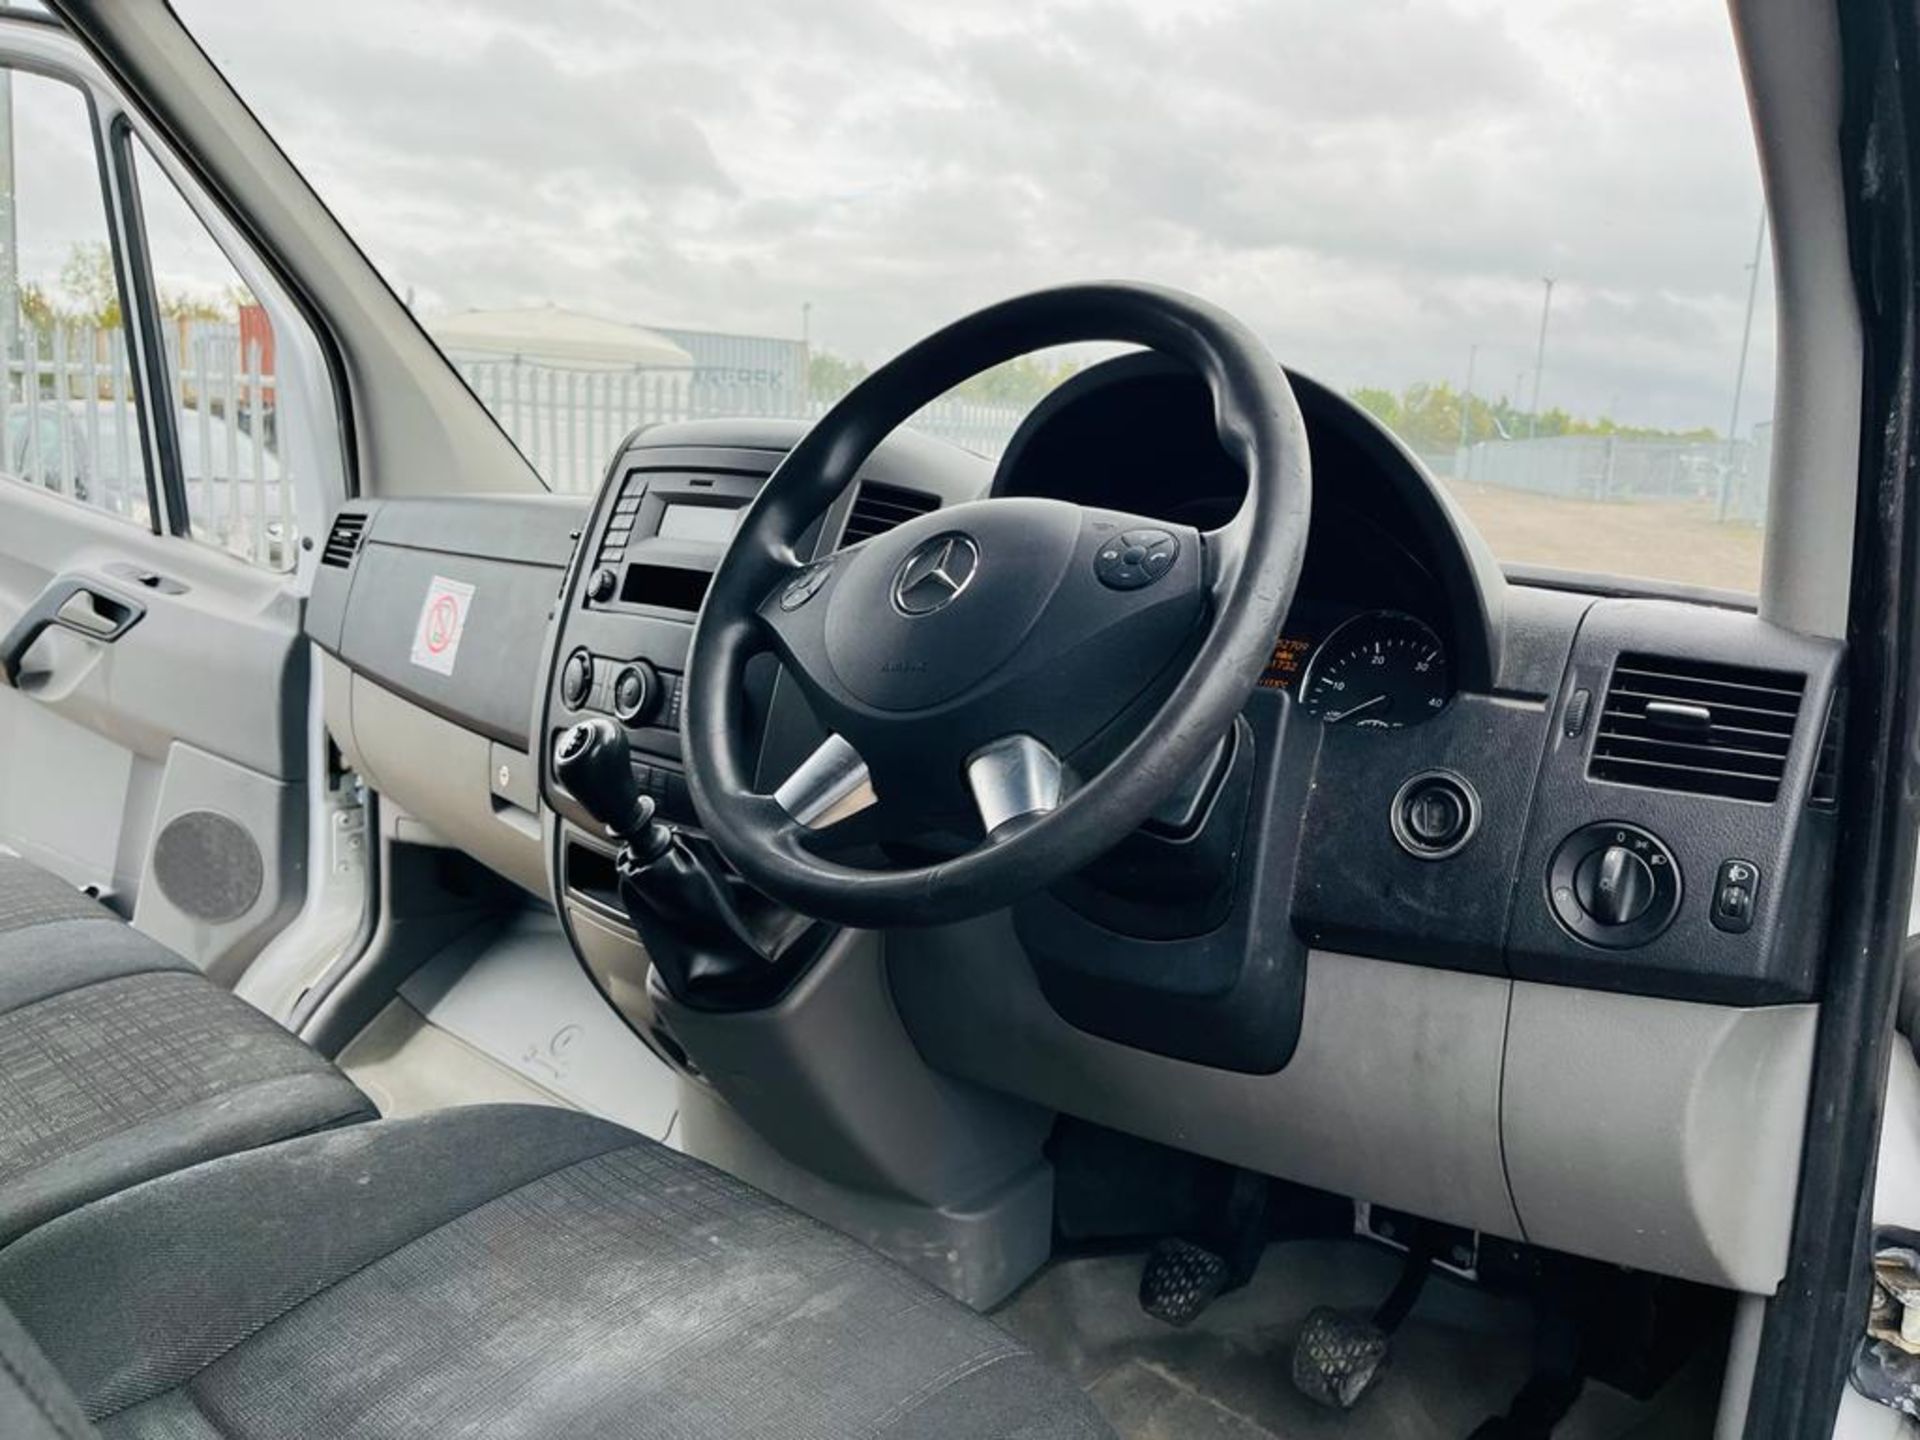 Mercedes-Benz Sprinter 313 2.1 CDI 3.5T LWB H/R 2014 '64 Reg' - Parking Sensors - Bluetooth Media - Image 18 of 27